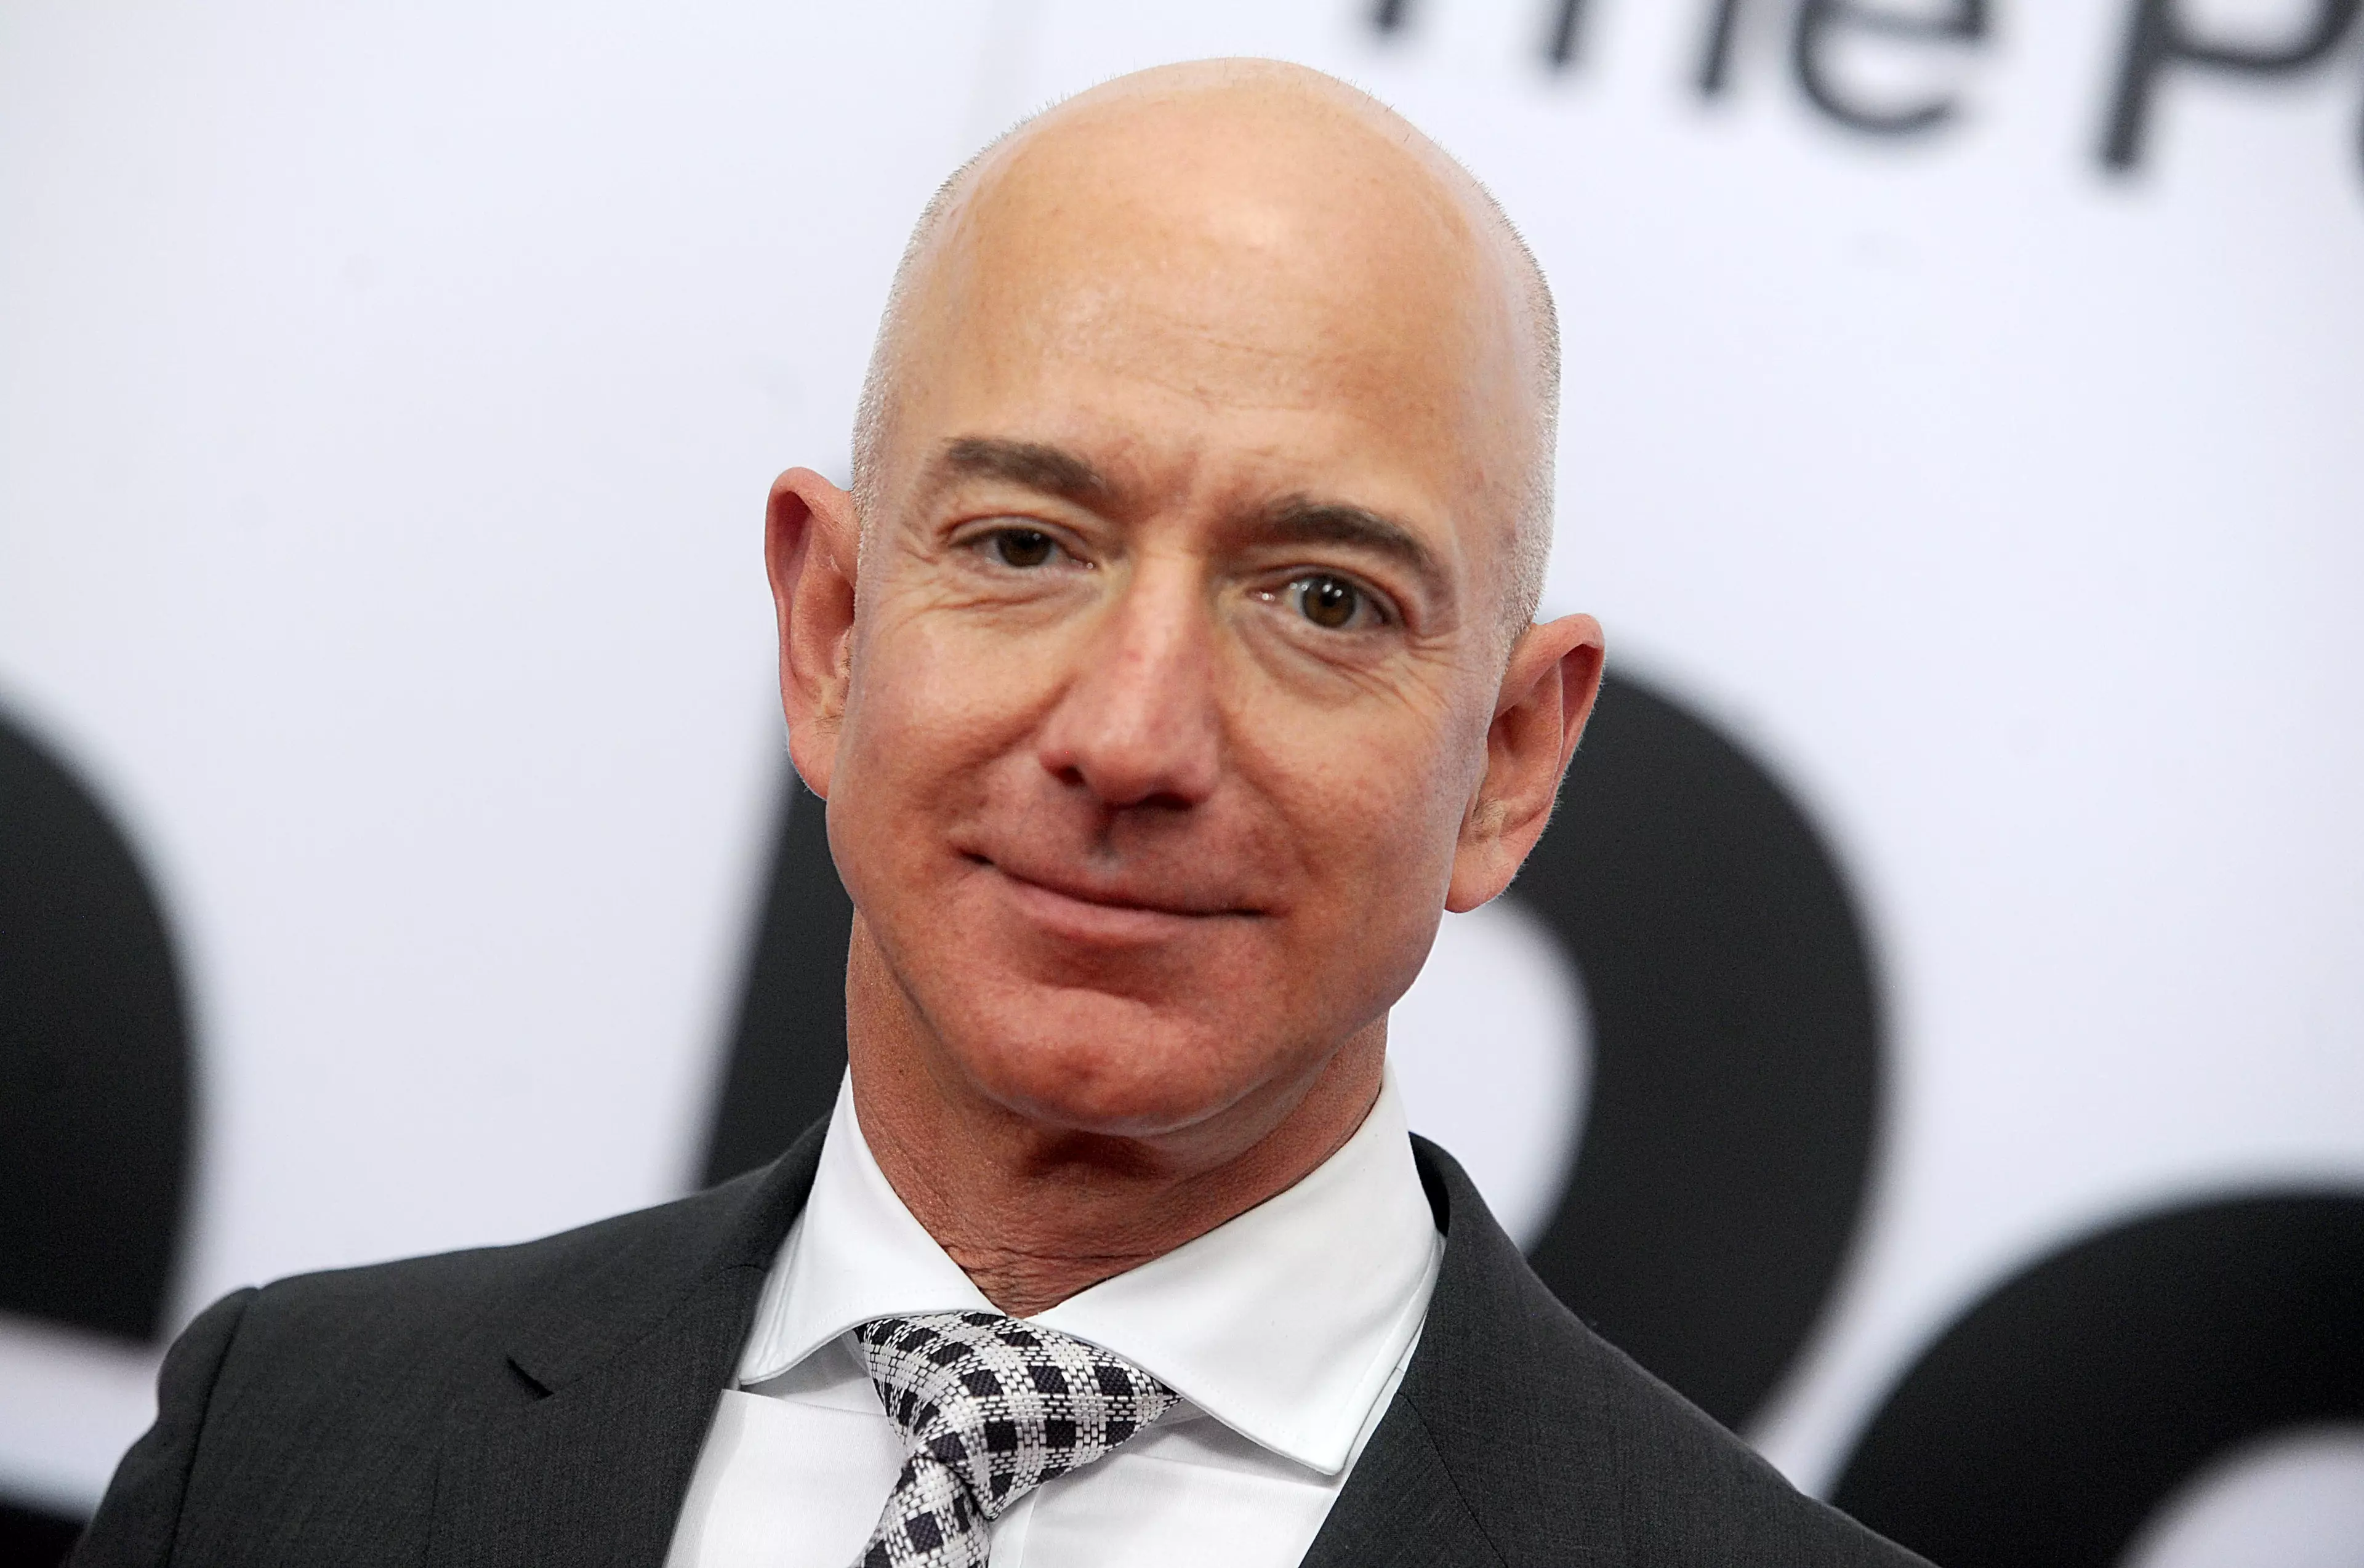 Jeff Bezos is still worth over $100 billion.